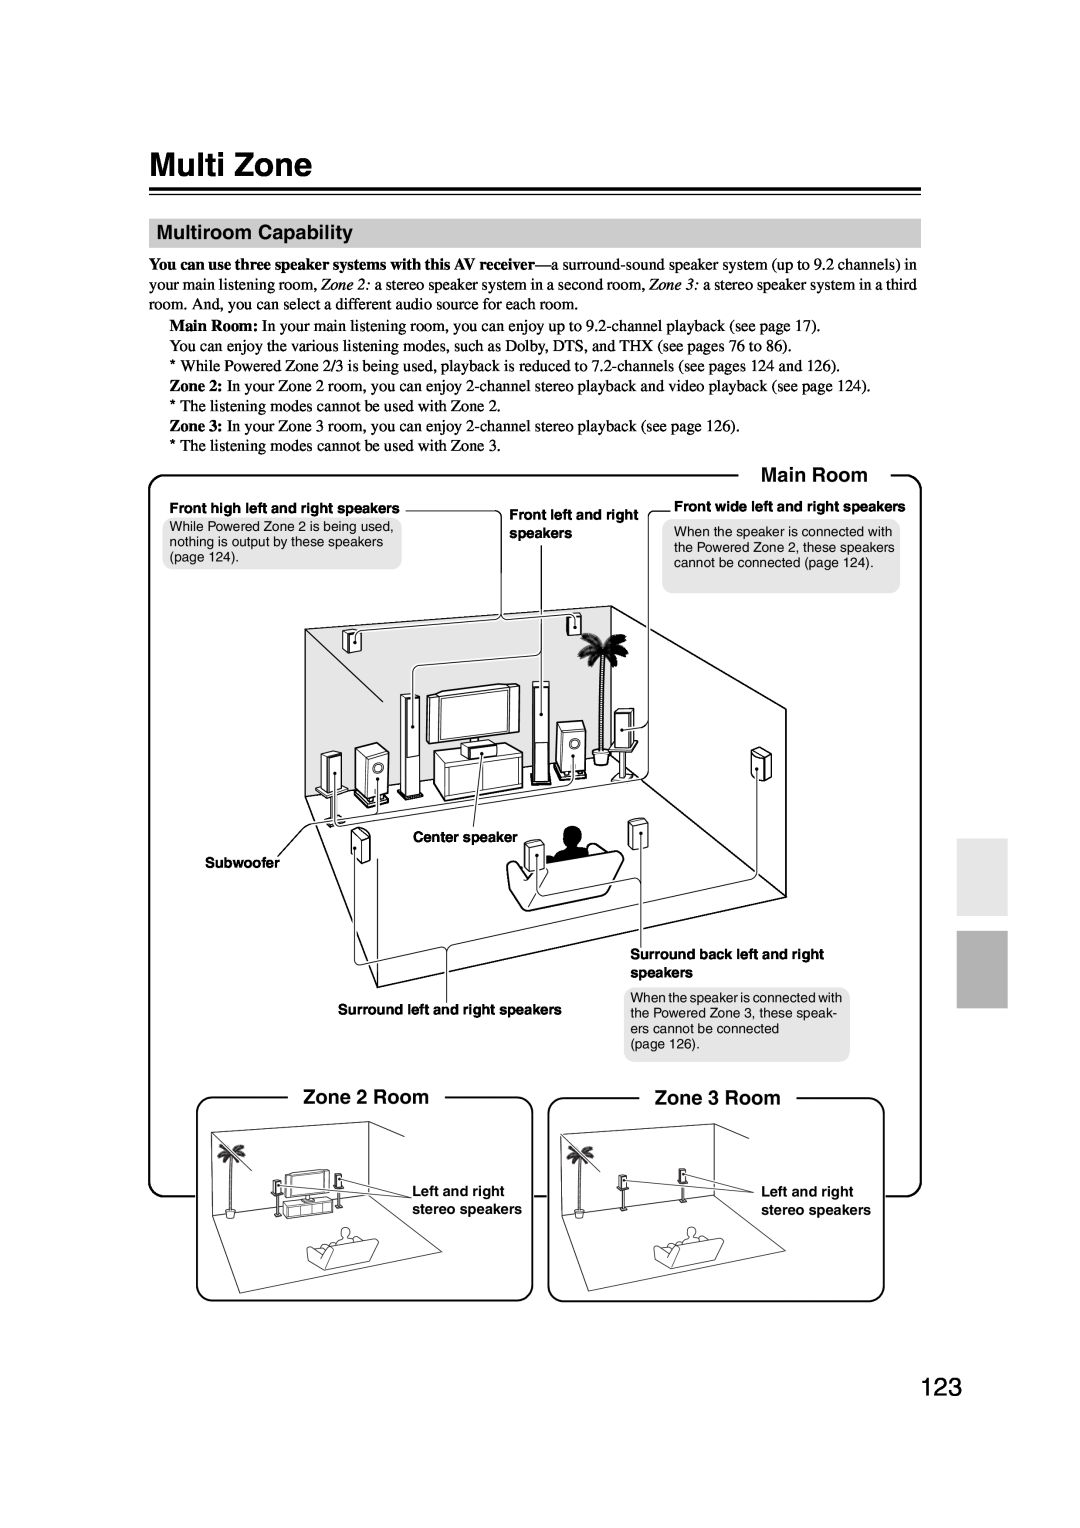 Onkyo TX-NR1007 instruction manual Multi Zone, Multiroom Capability, Main Room, Zone 2 Room, Zone 3 Room 